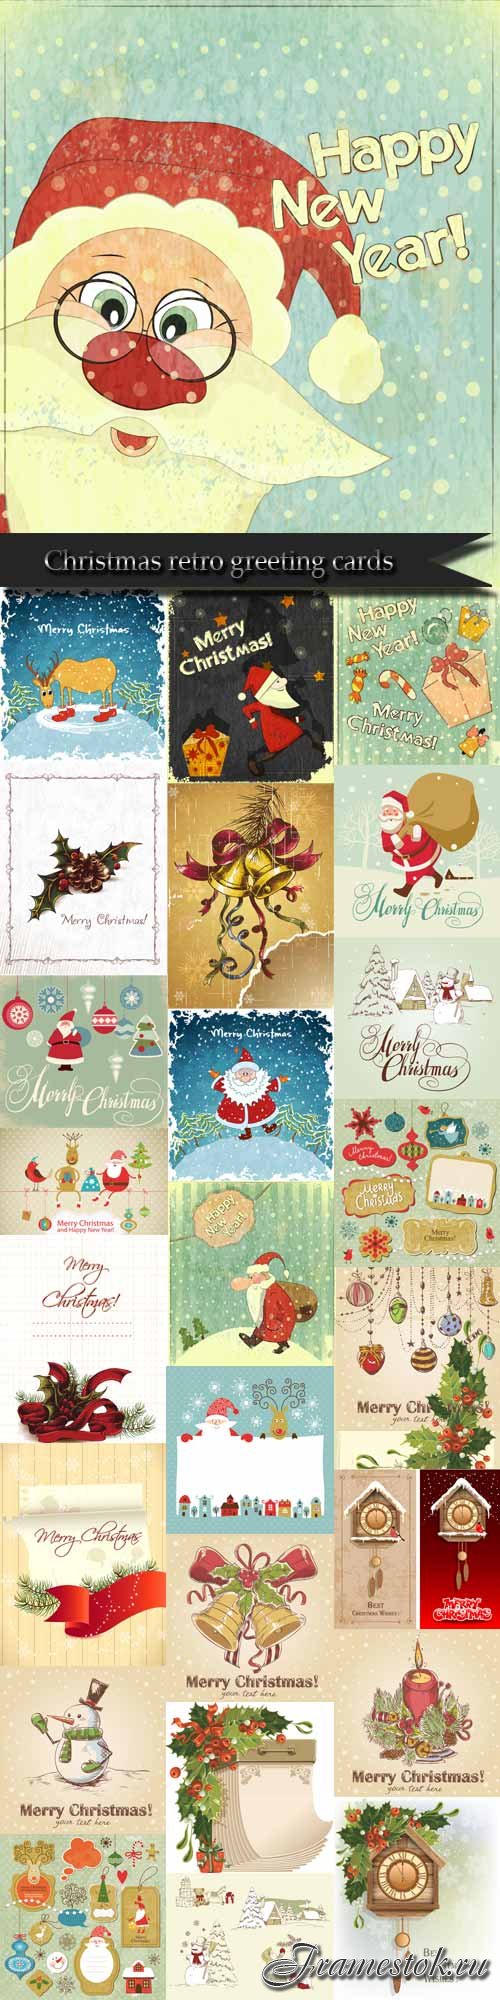 Christmas retro greeting cards